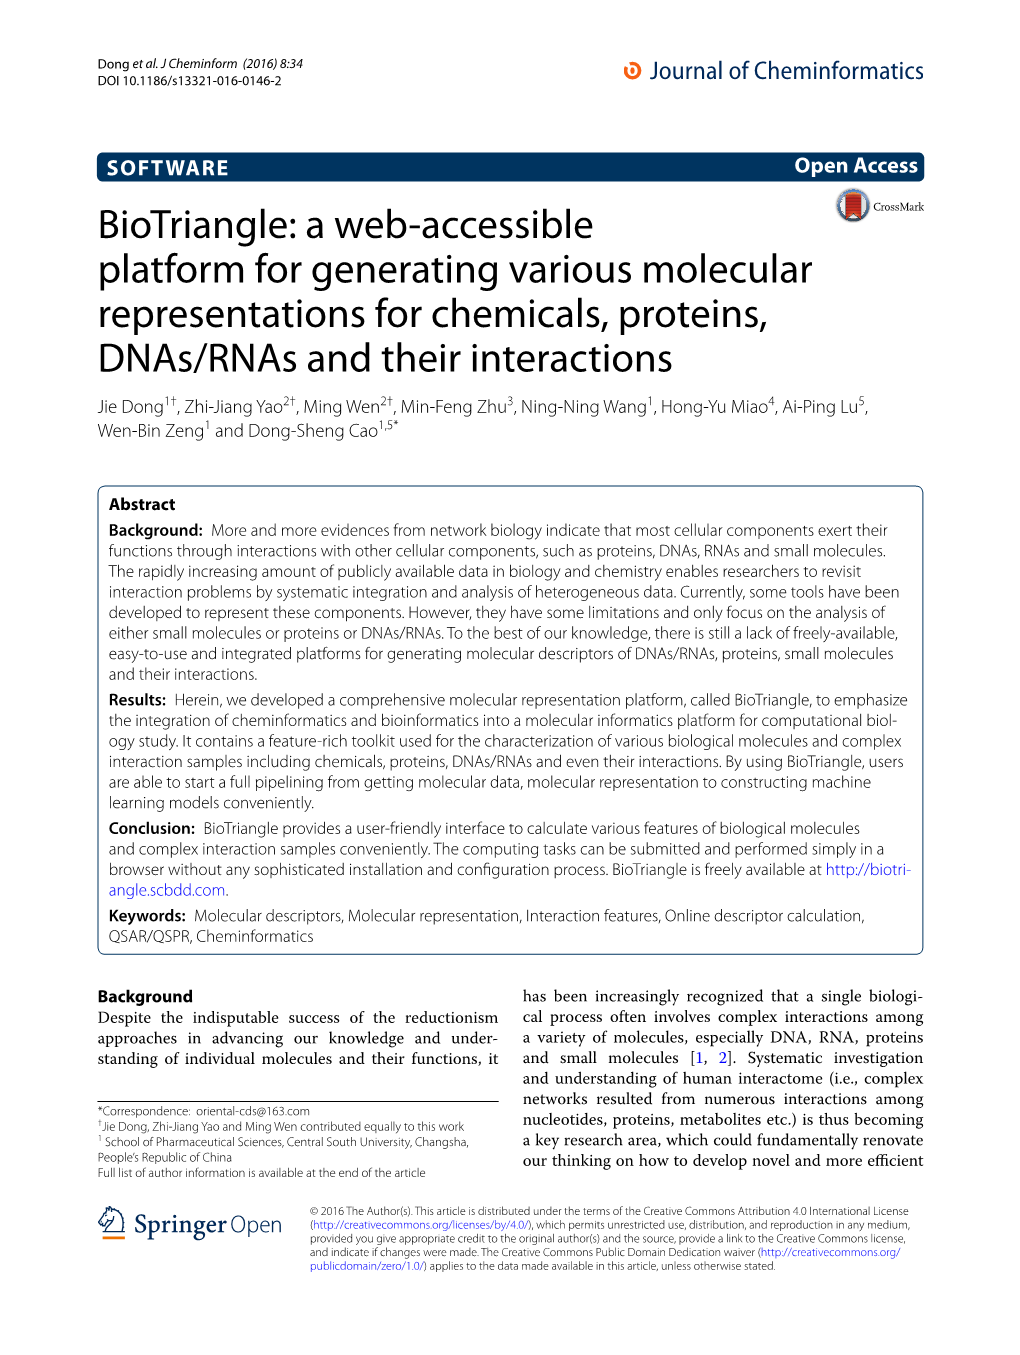 A Web-Accessible Platform for Generating Various Molecular